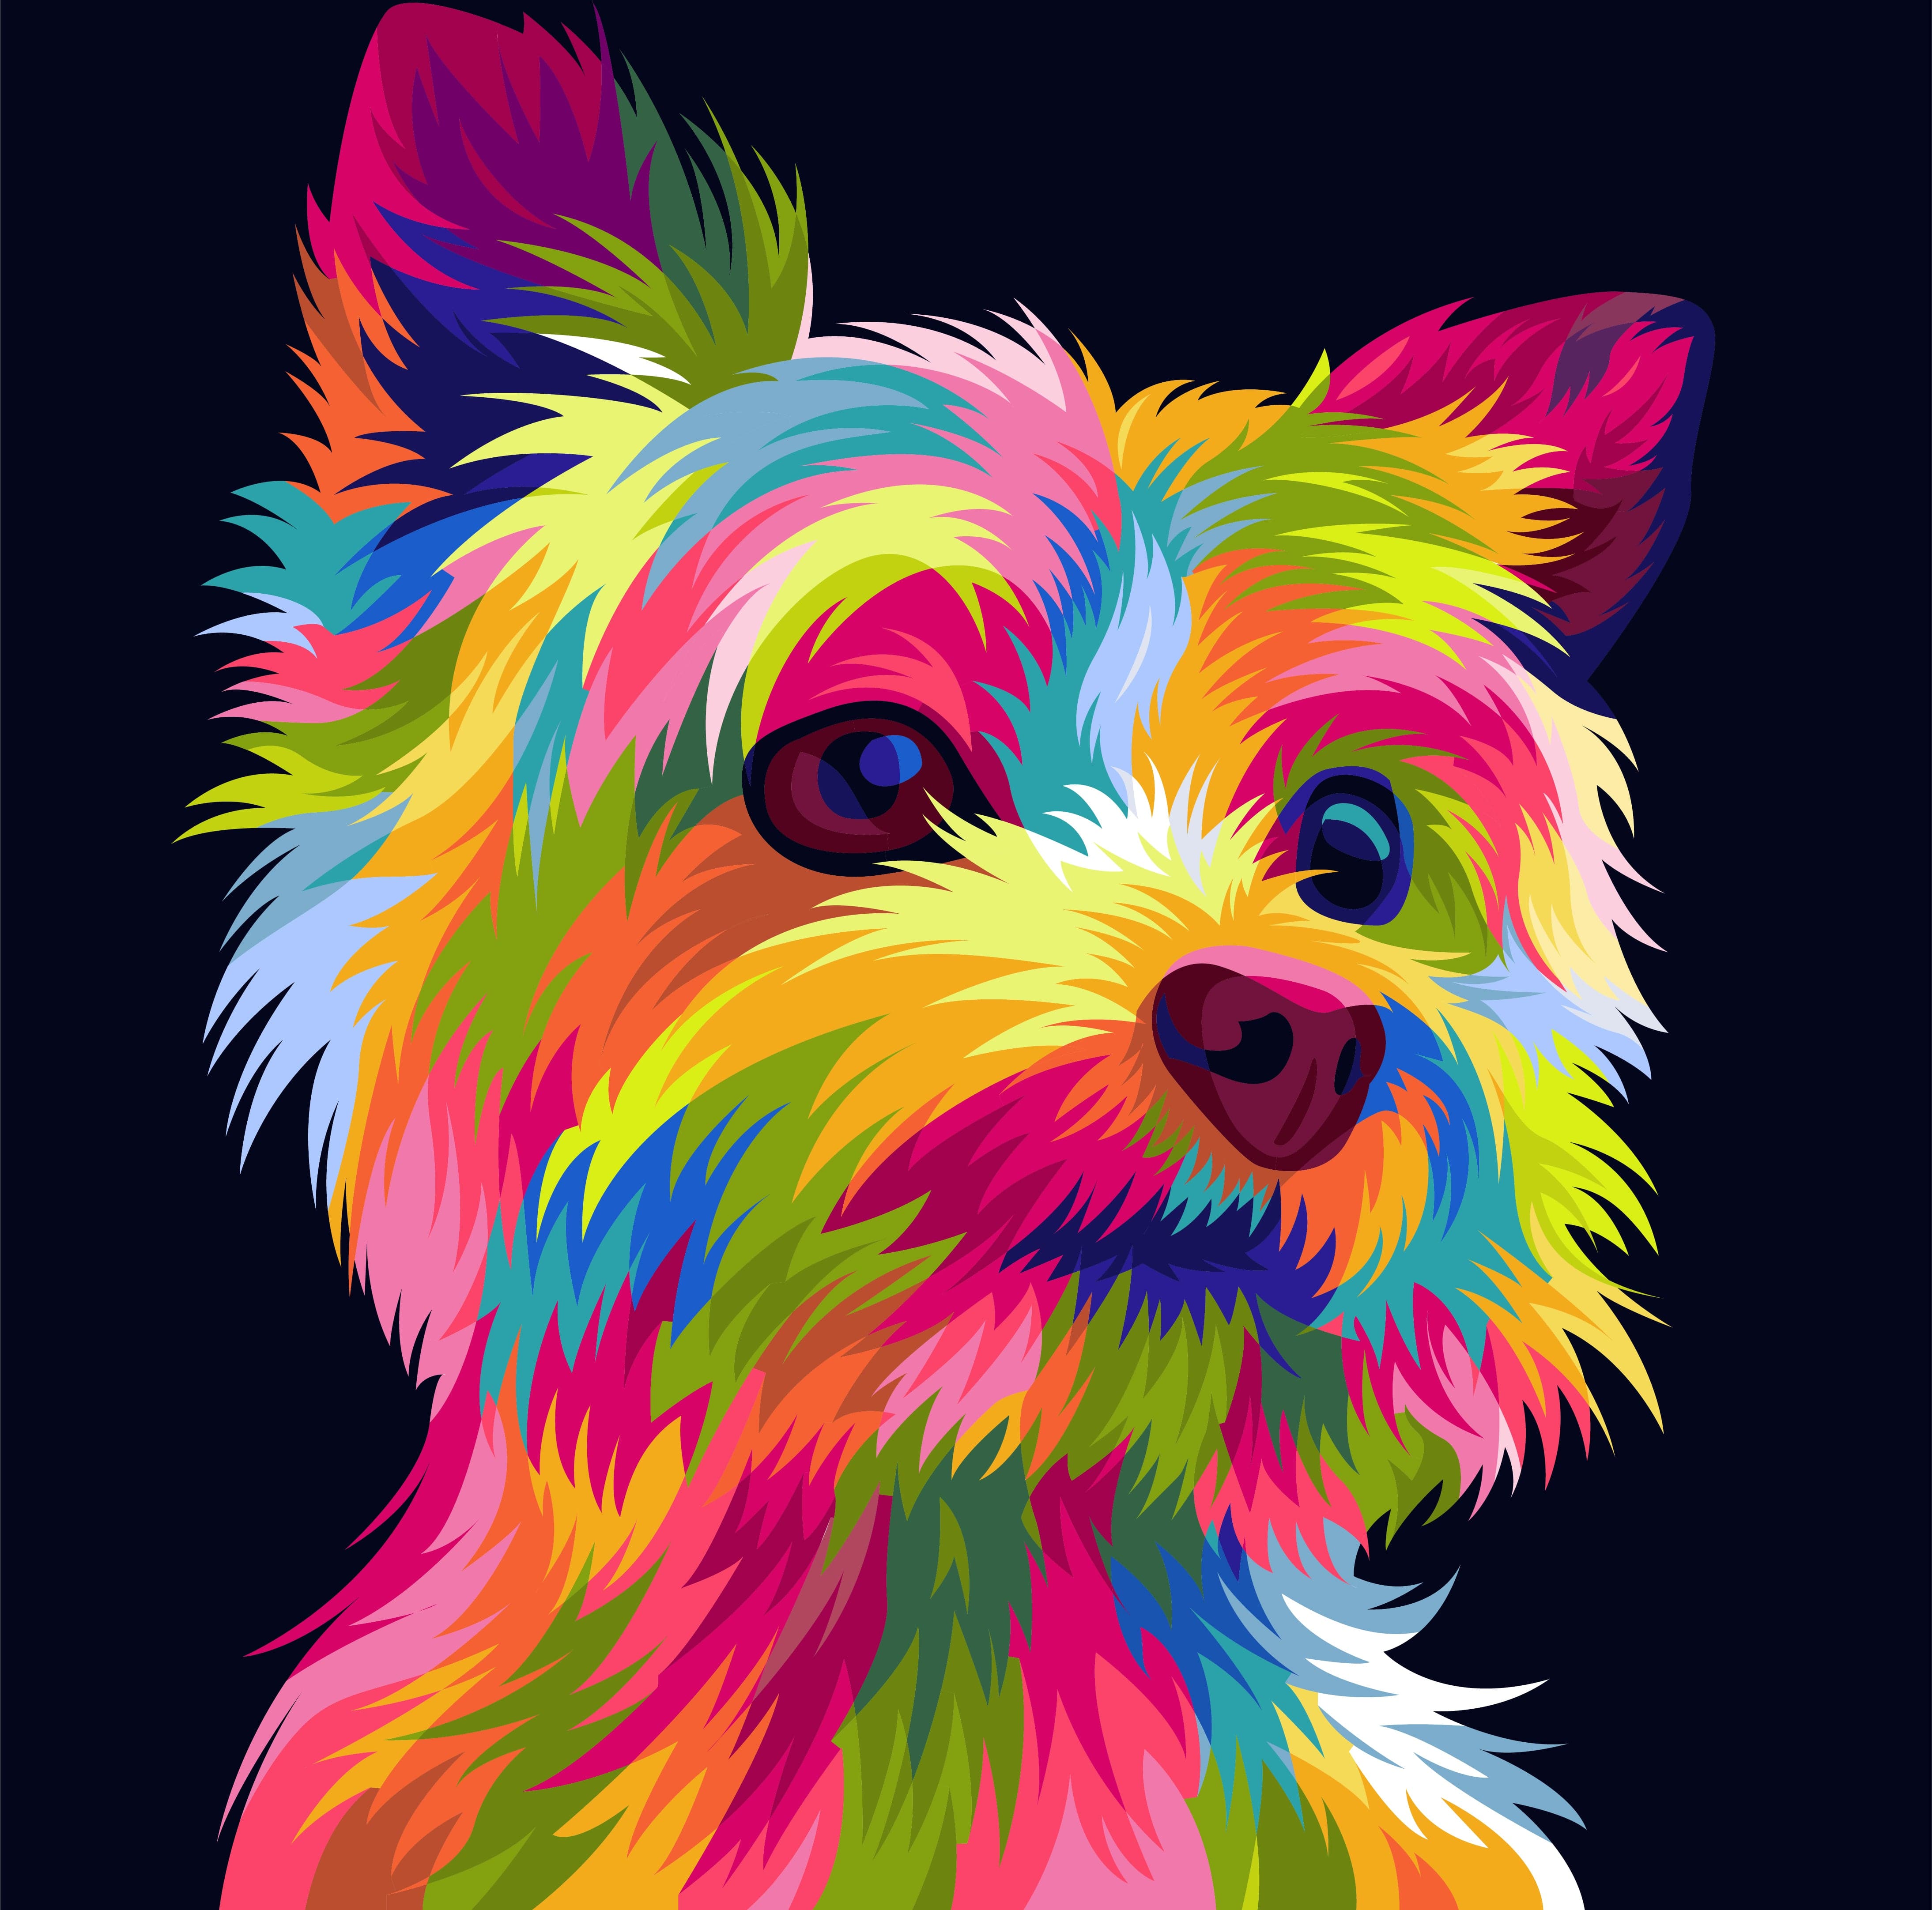 Framed 1 Panel - Rainbow Puppy